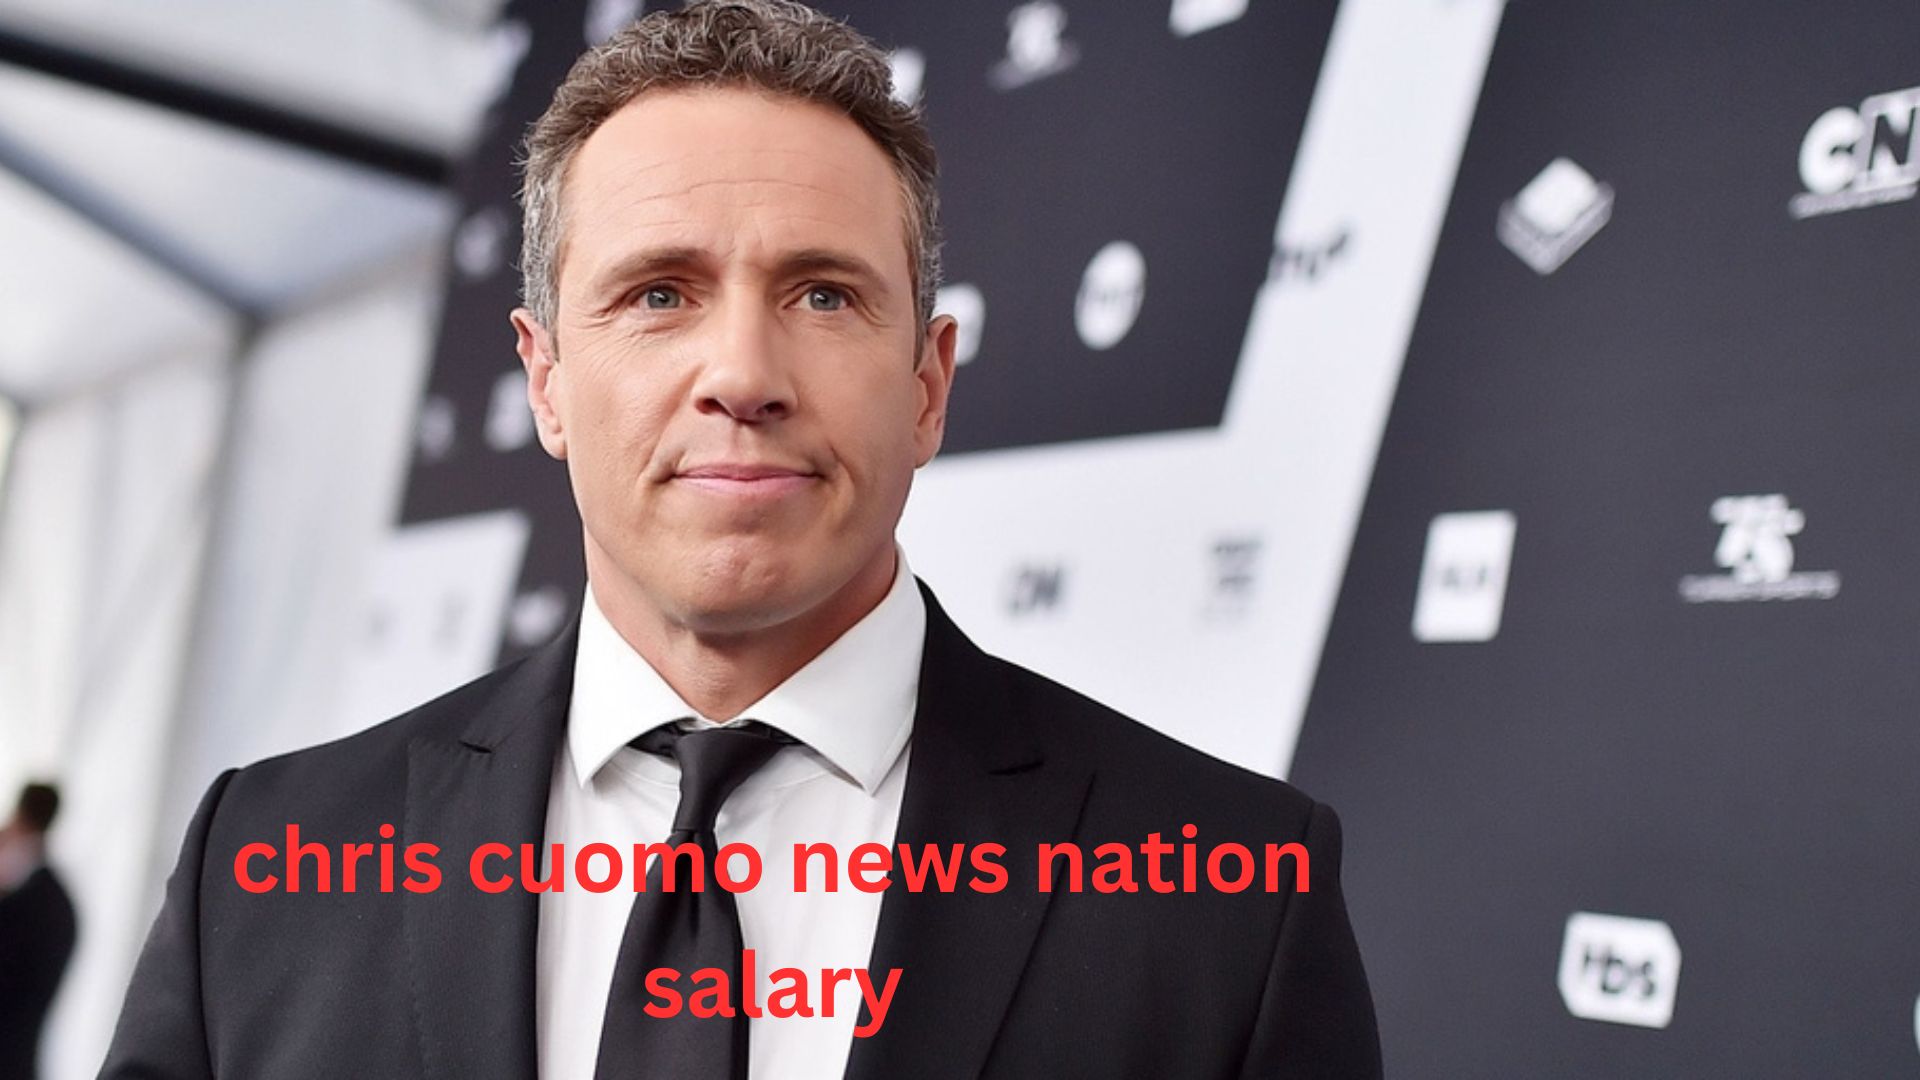 chris cuomo news nation salary